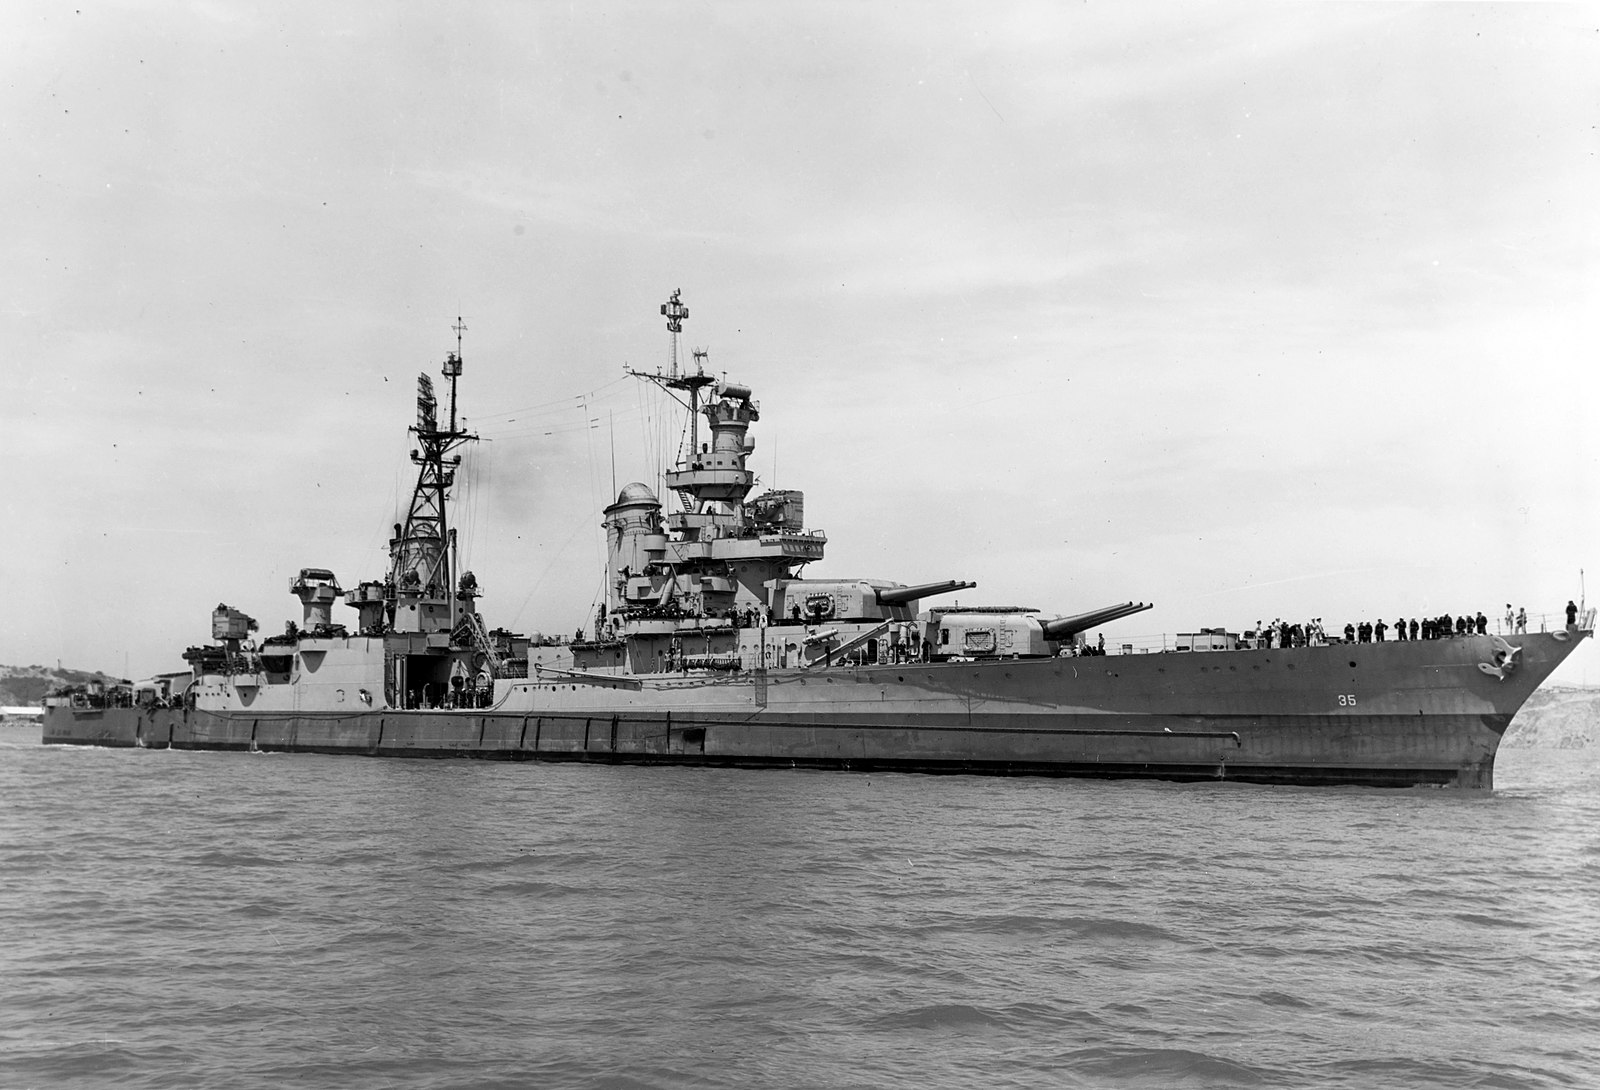 USS Indianapolis